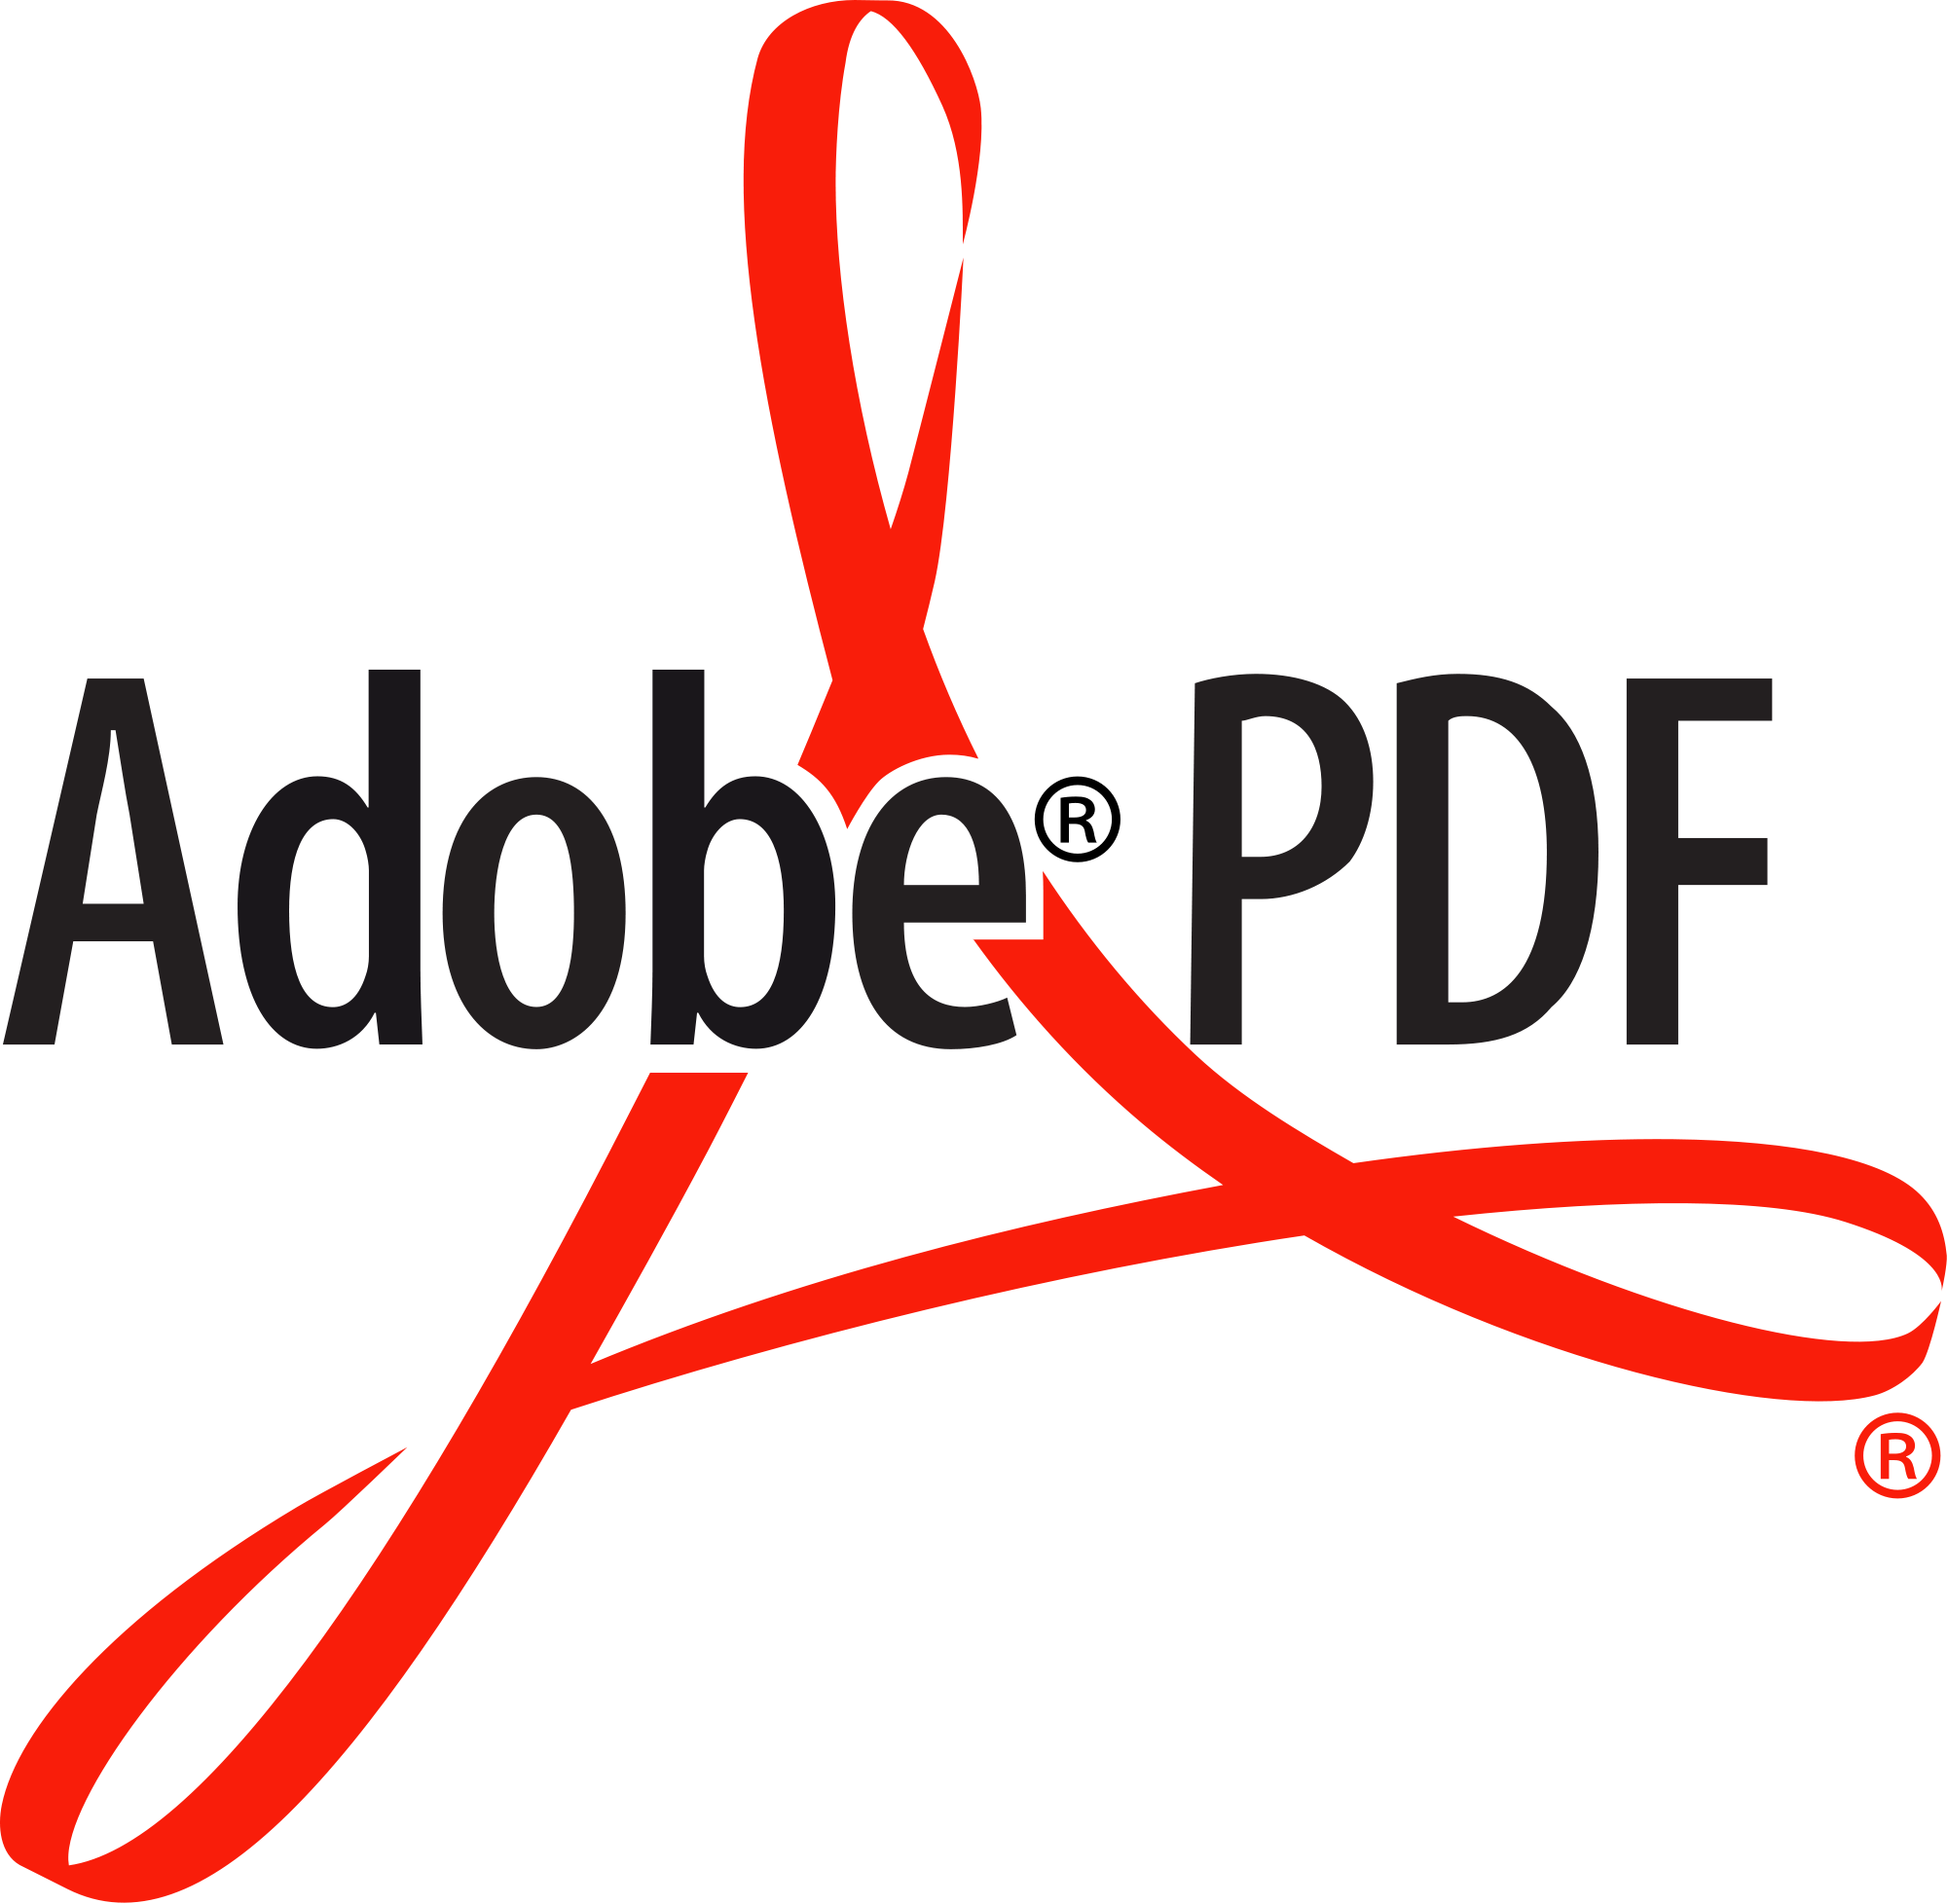 Adove Pdf - Adobe Reader Pdf Png (2000x1956)